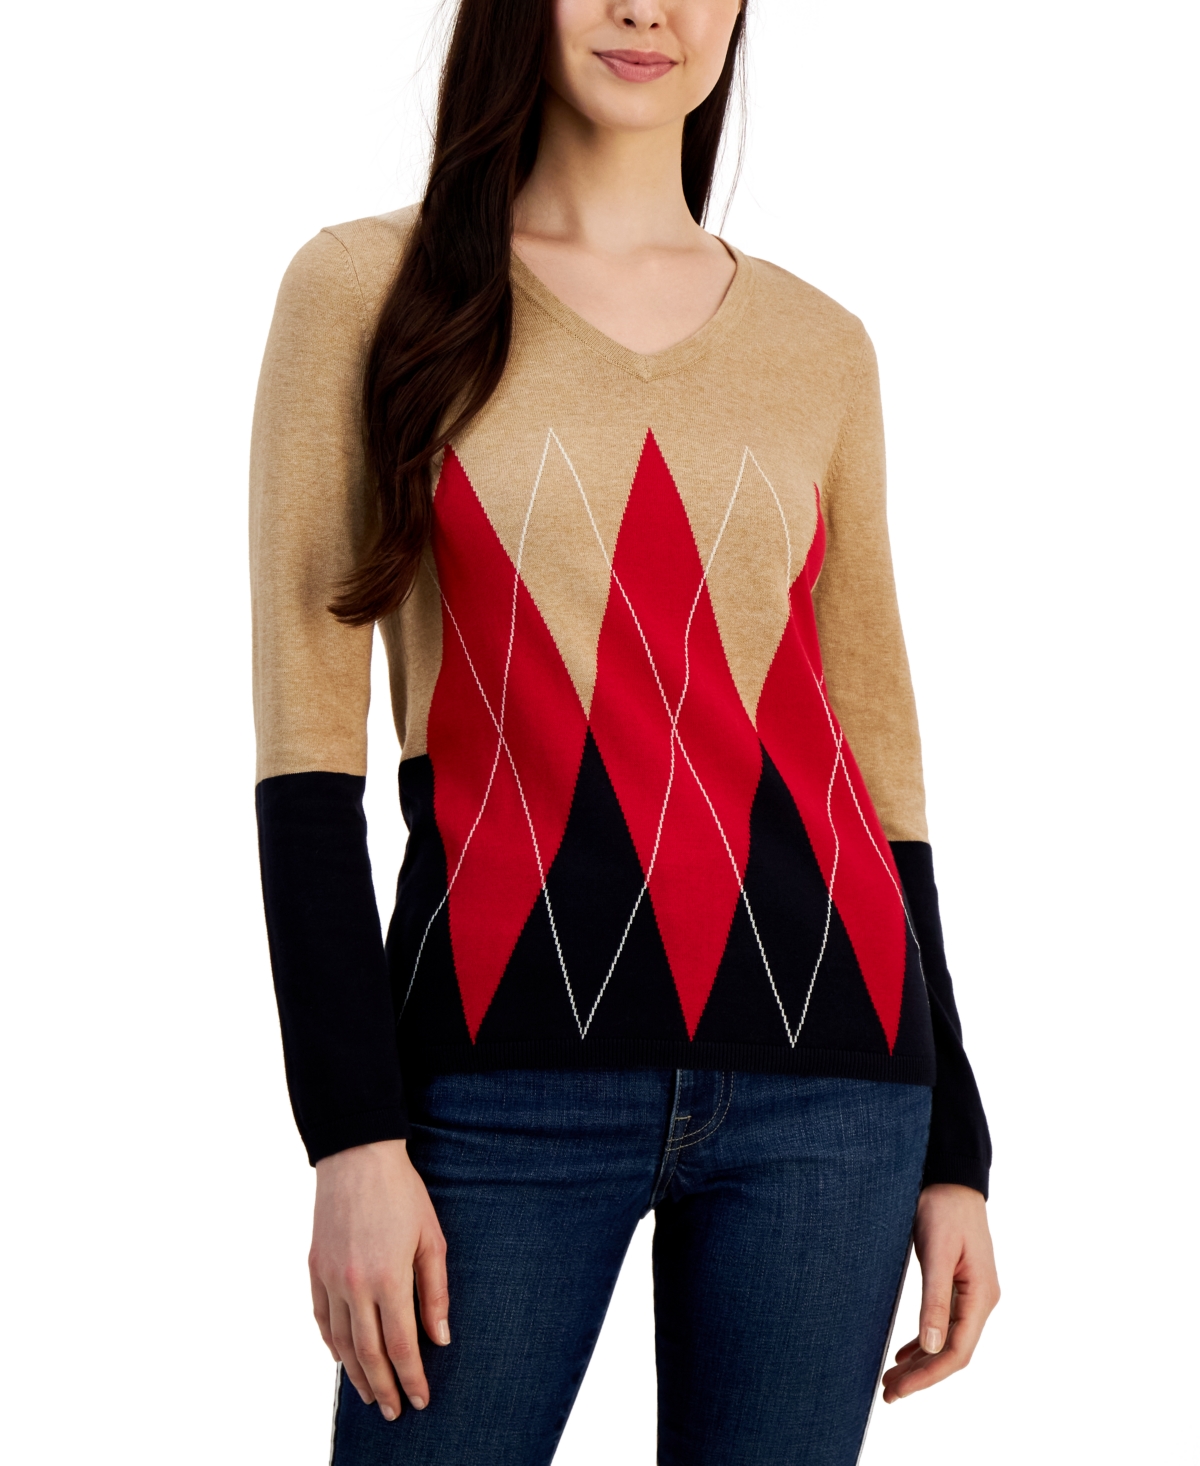 Tommy Hilfiger Women's Cotton Colorblocked Argyle Sweater